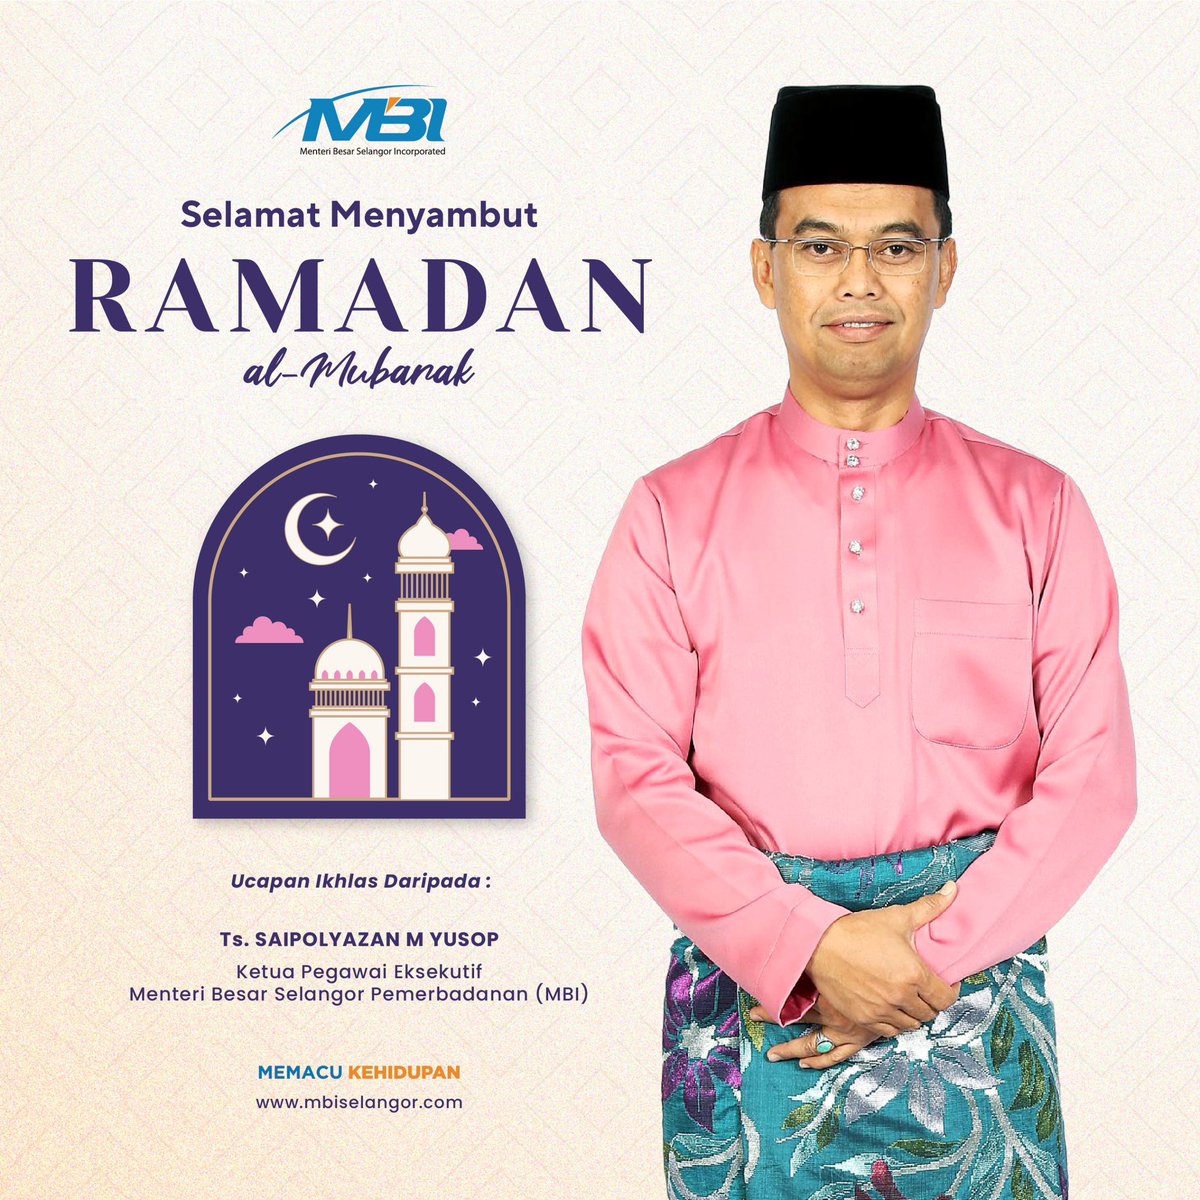 Ramadan Mubarak! May this holy month bring us peace, prosperity, and spiritual fulfillment. Maaf Zahir Batin!